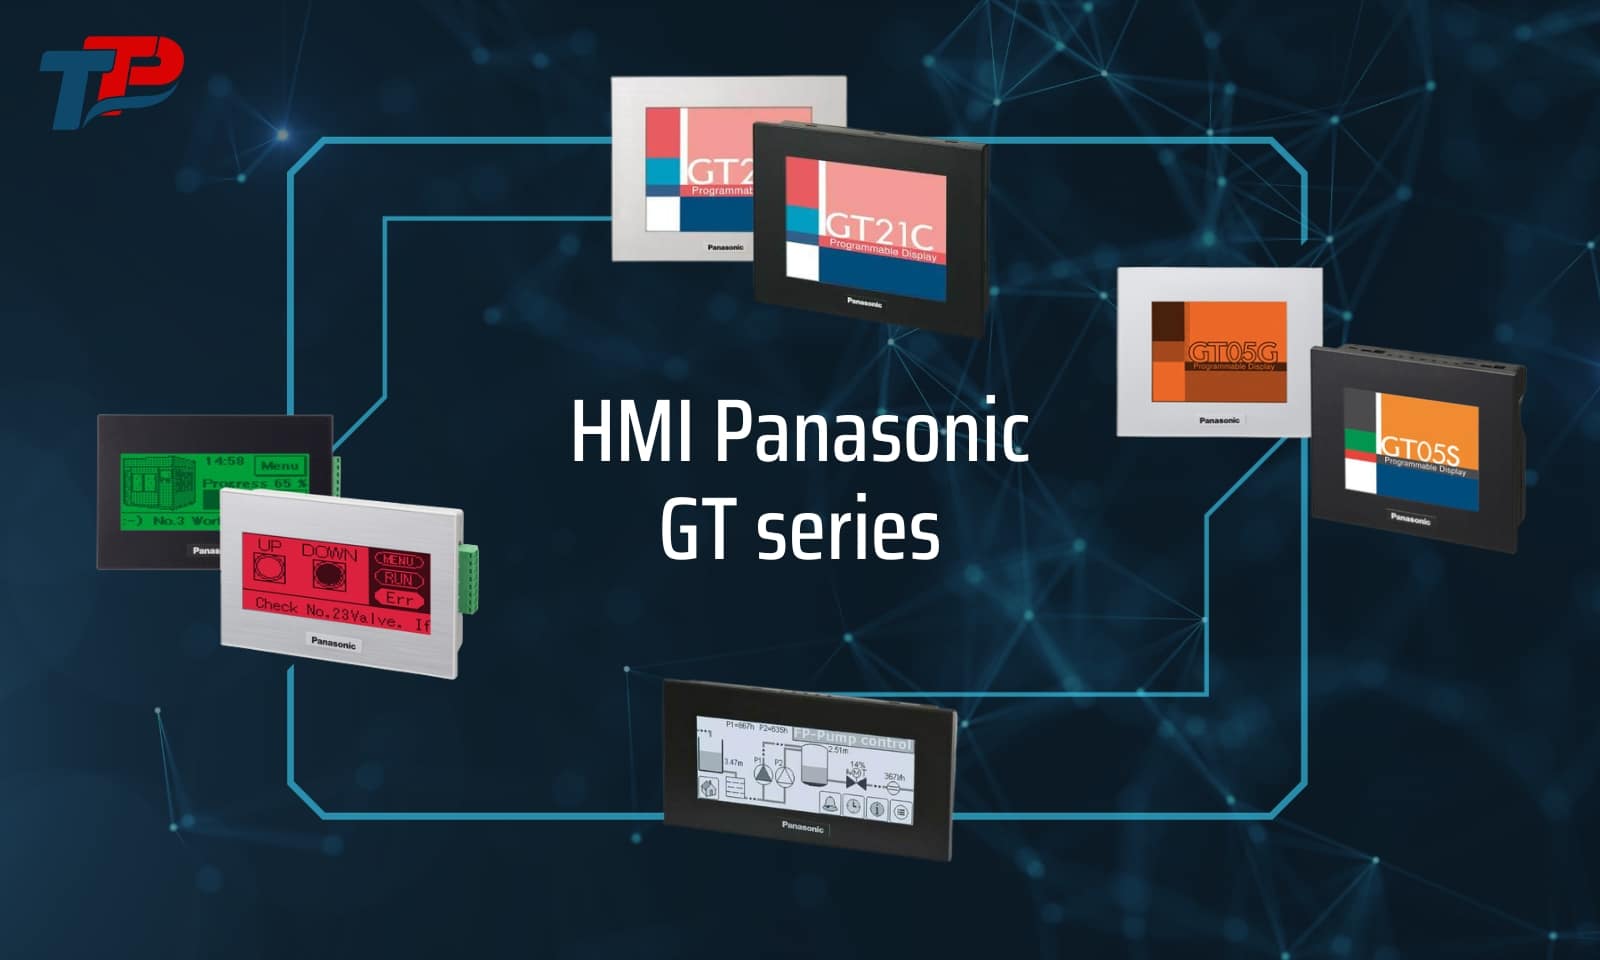 HMI Panasonic GT series